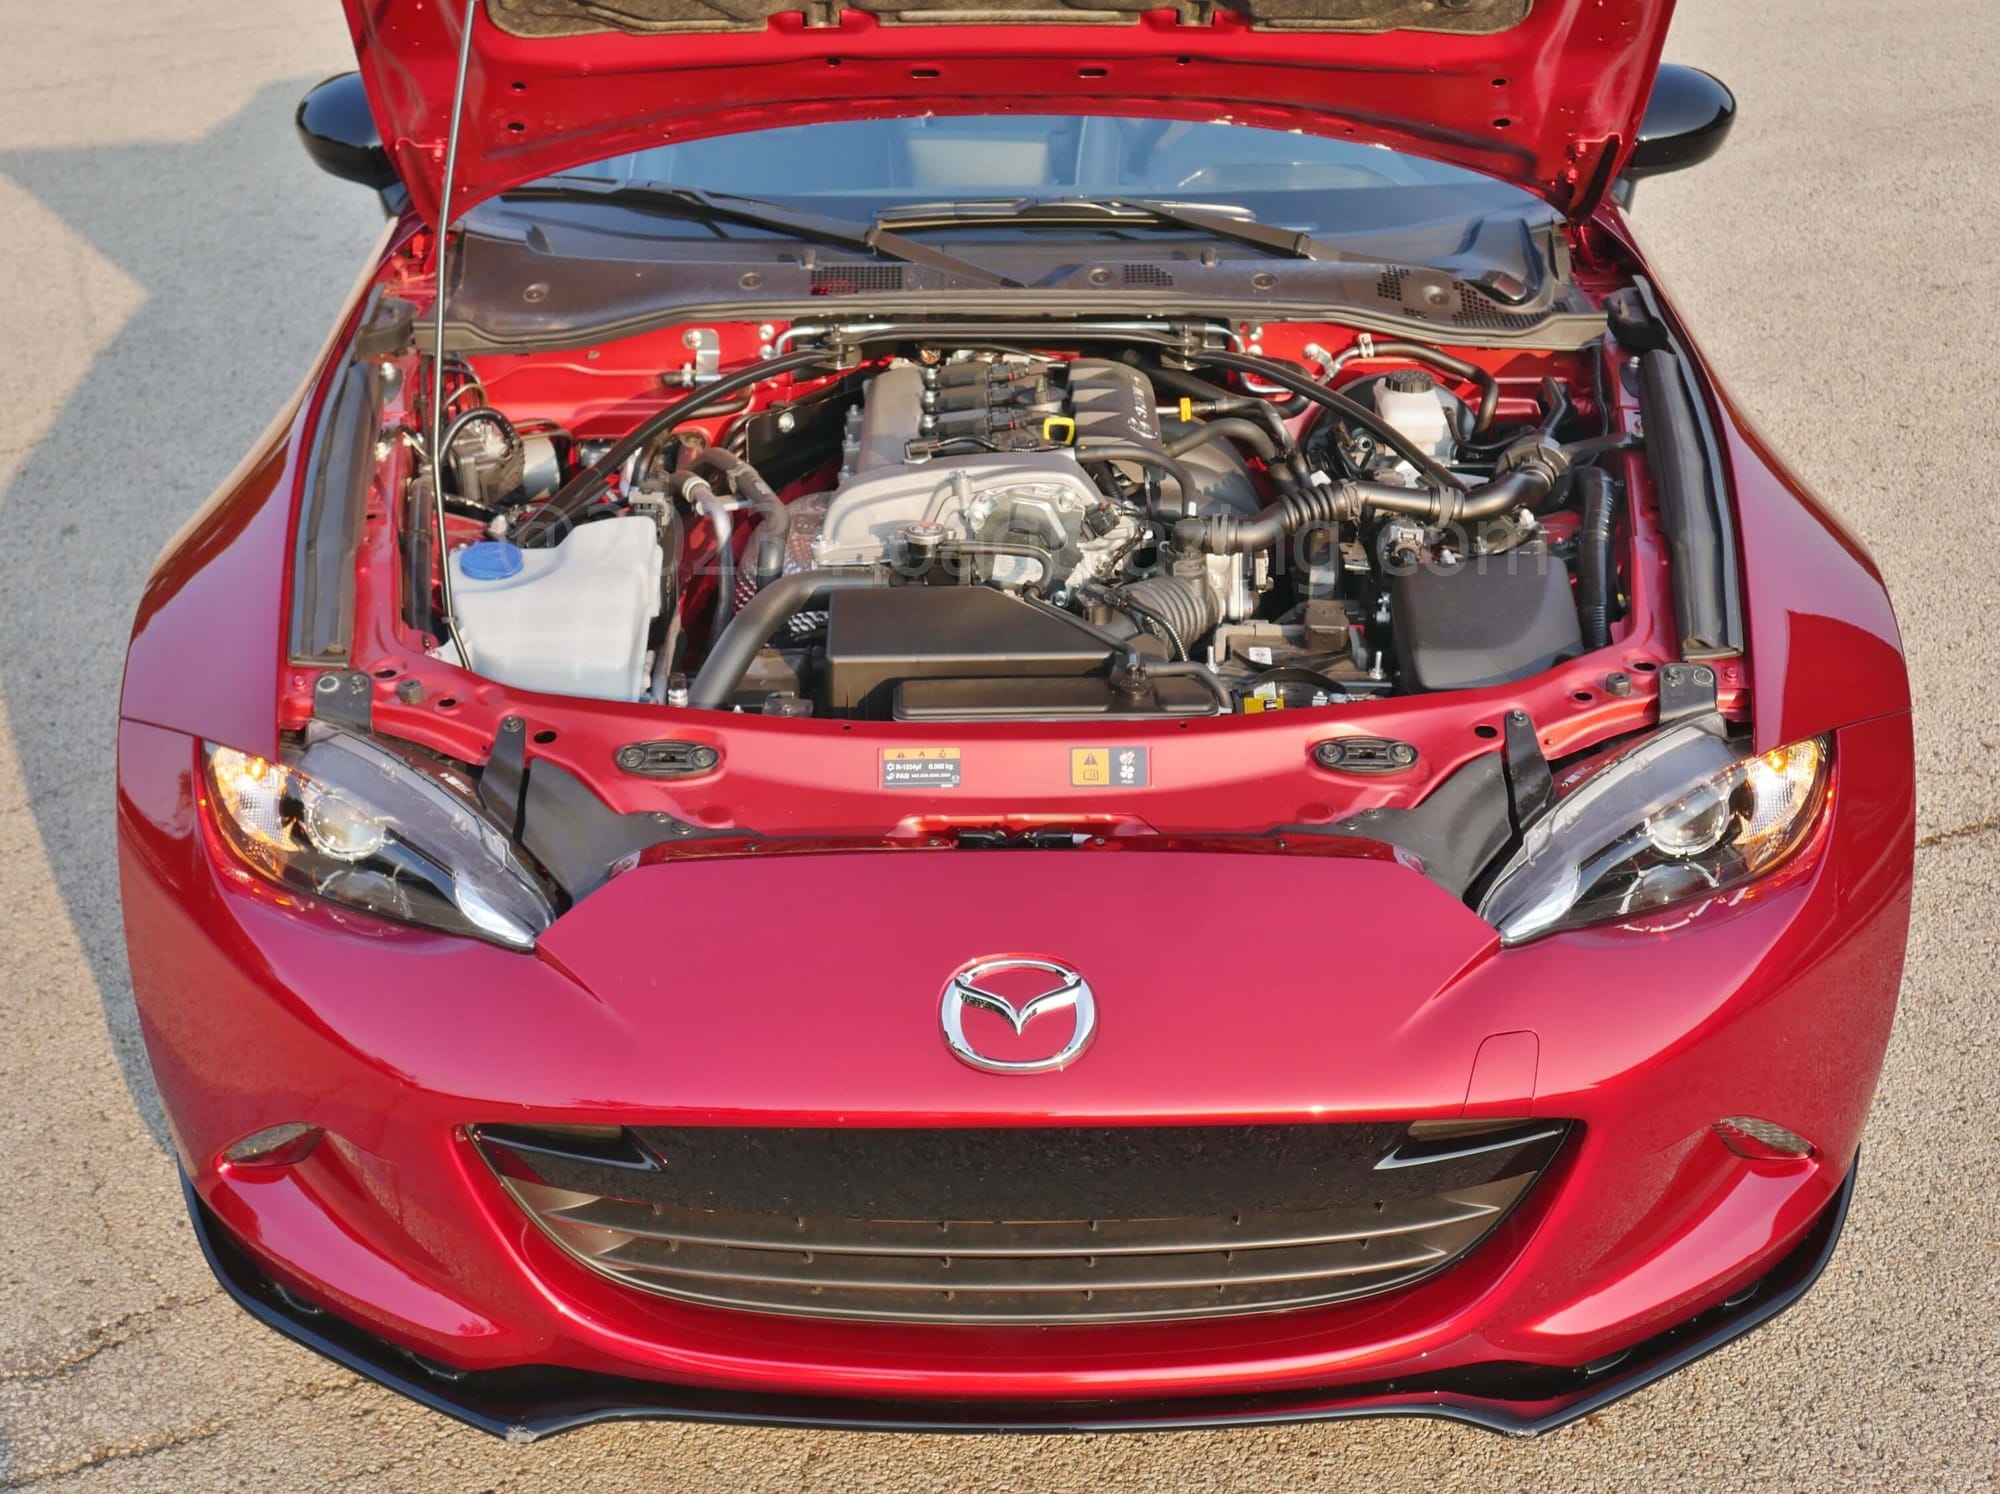 2023 Mazda MX-5 Miata RF Club: longitudinal 2.0L DOHC gas I-4 sends 181 hp & 155 lb-ft through close ratio 6 speed manual gearbox to rear propelling 2452 lbs briskly = 32 MPG